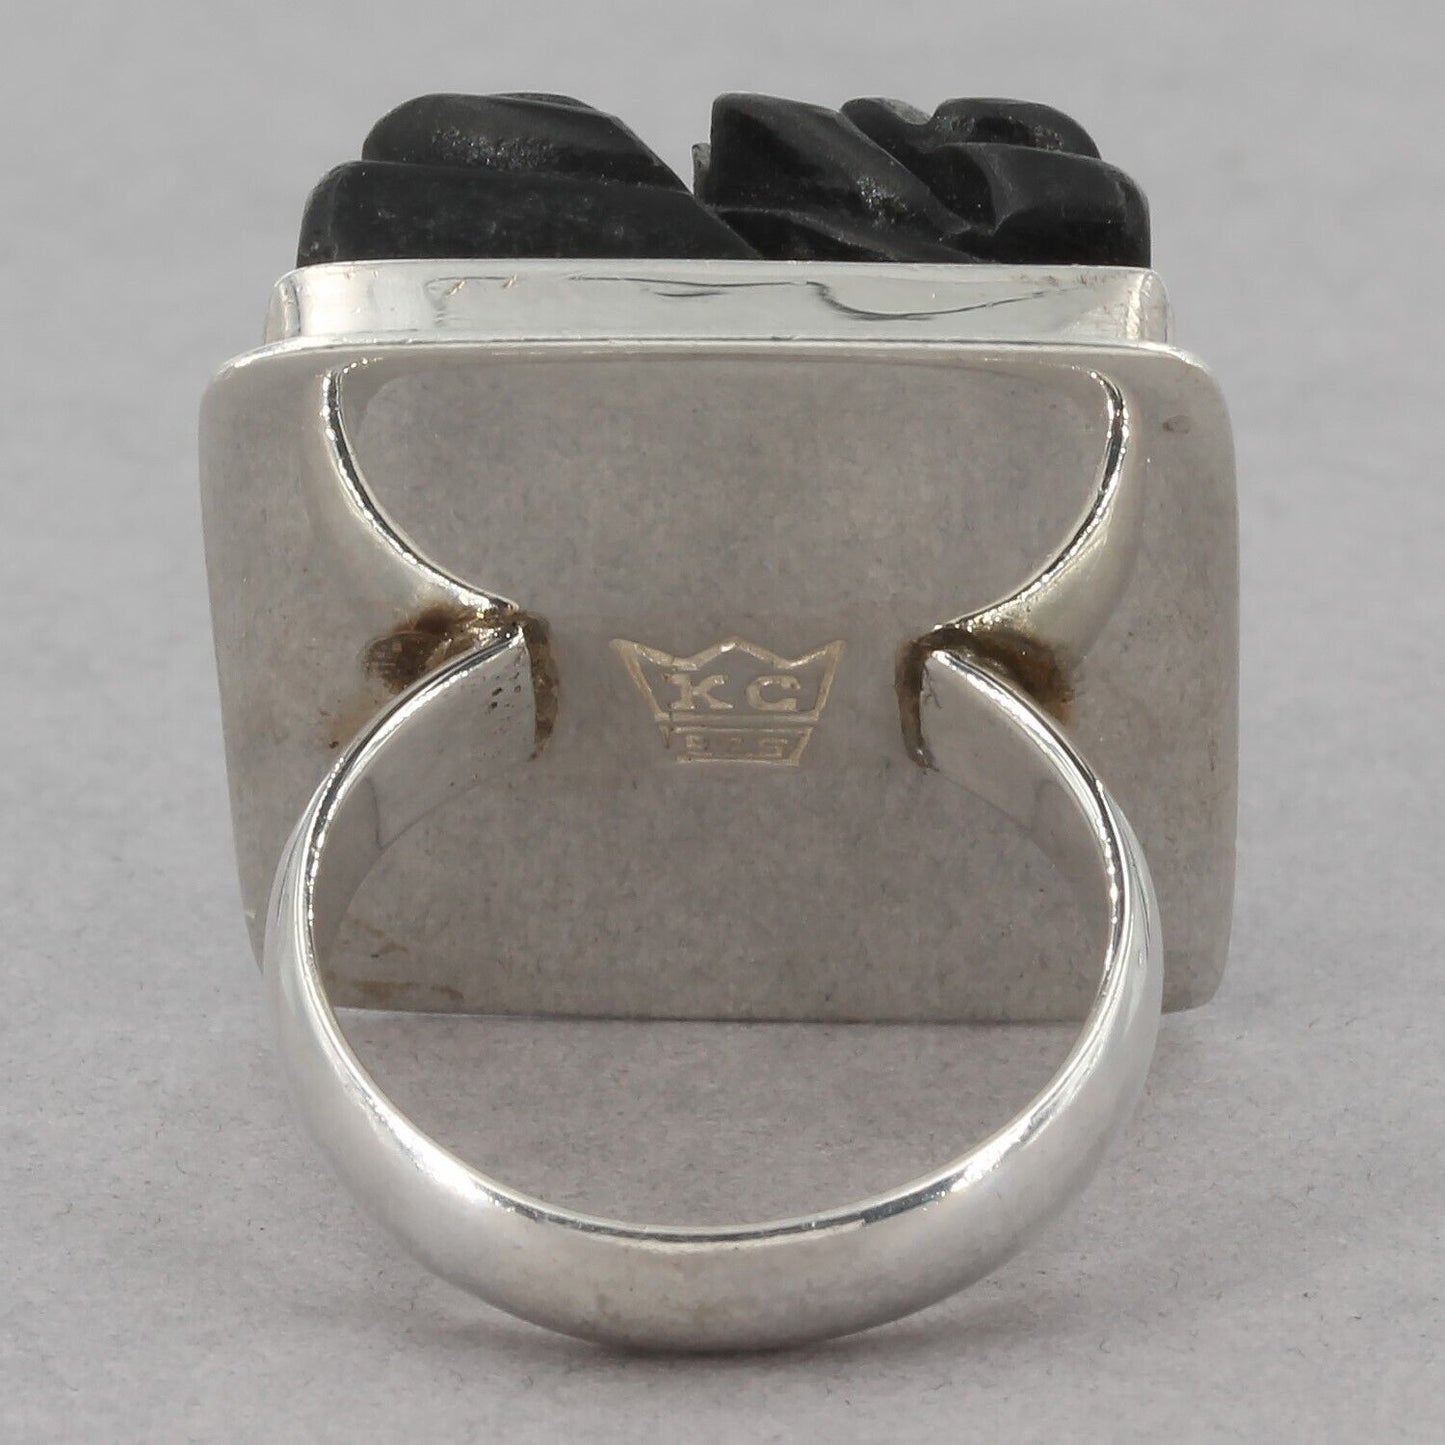 Unique Bold Sterling Carved Black Resin Rose Ring Size 7 Signed KC in Crown